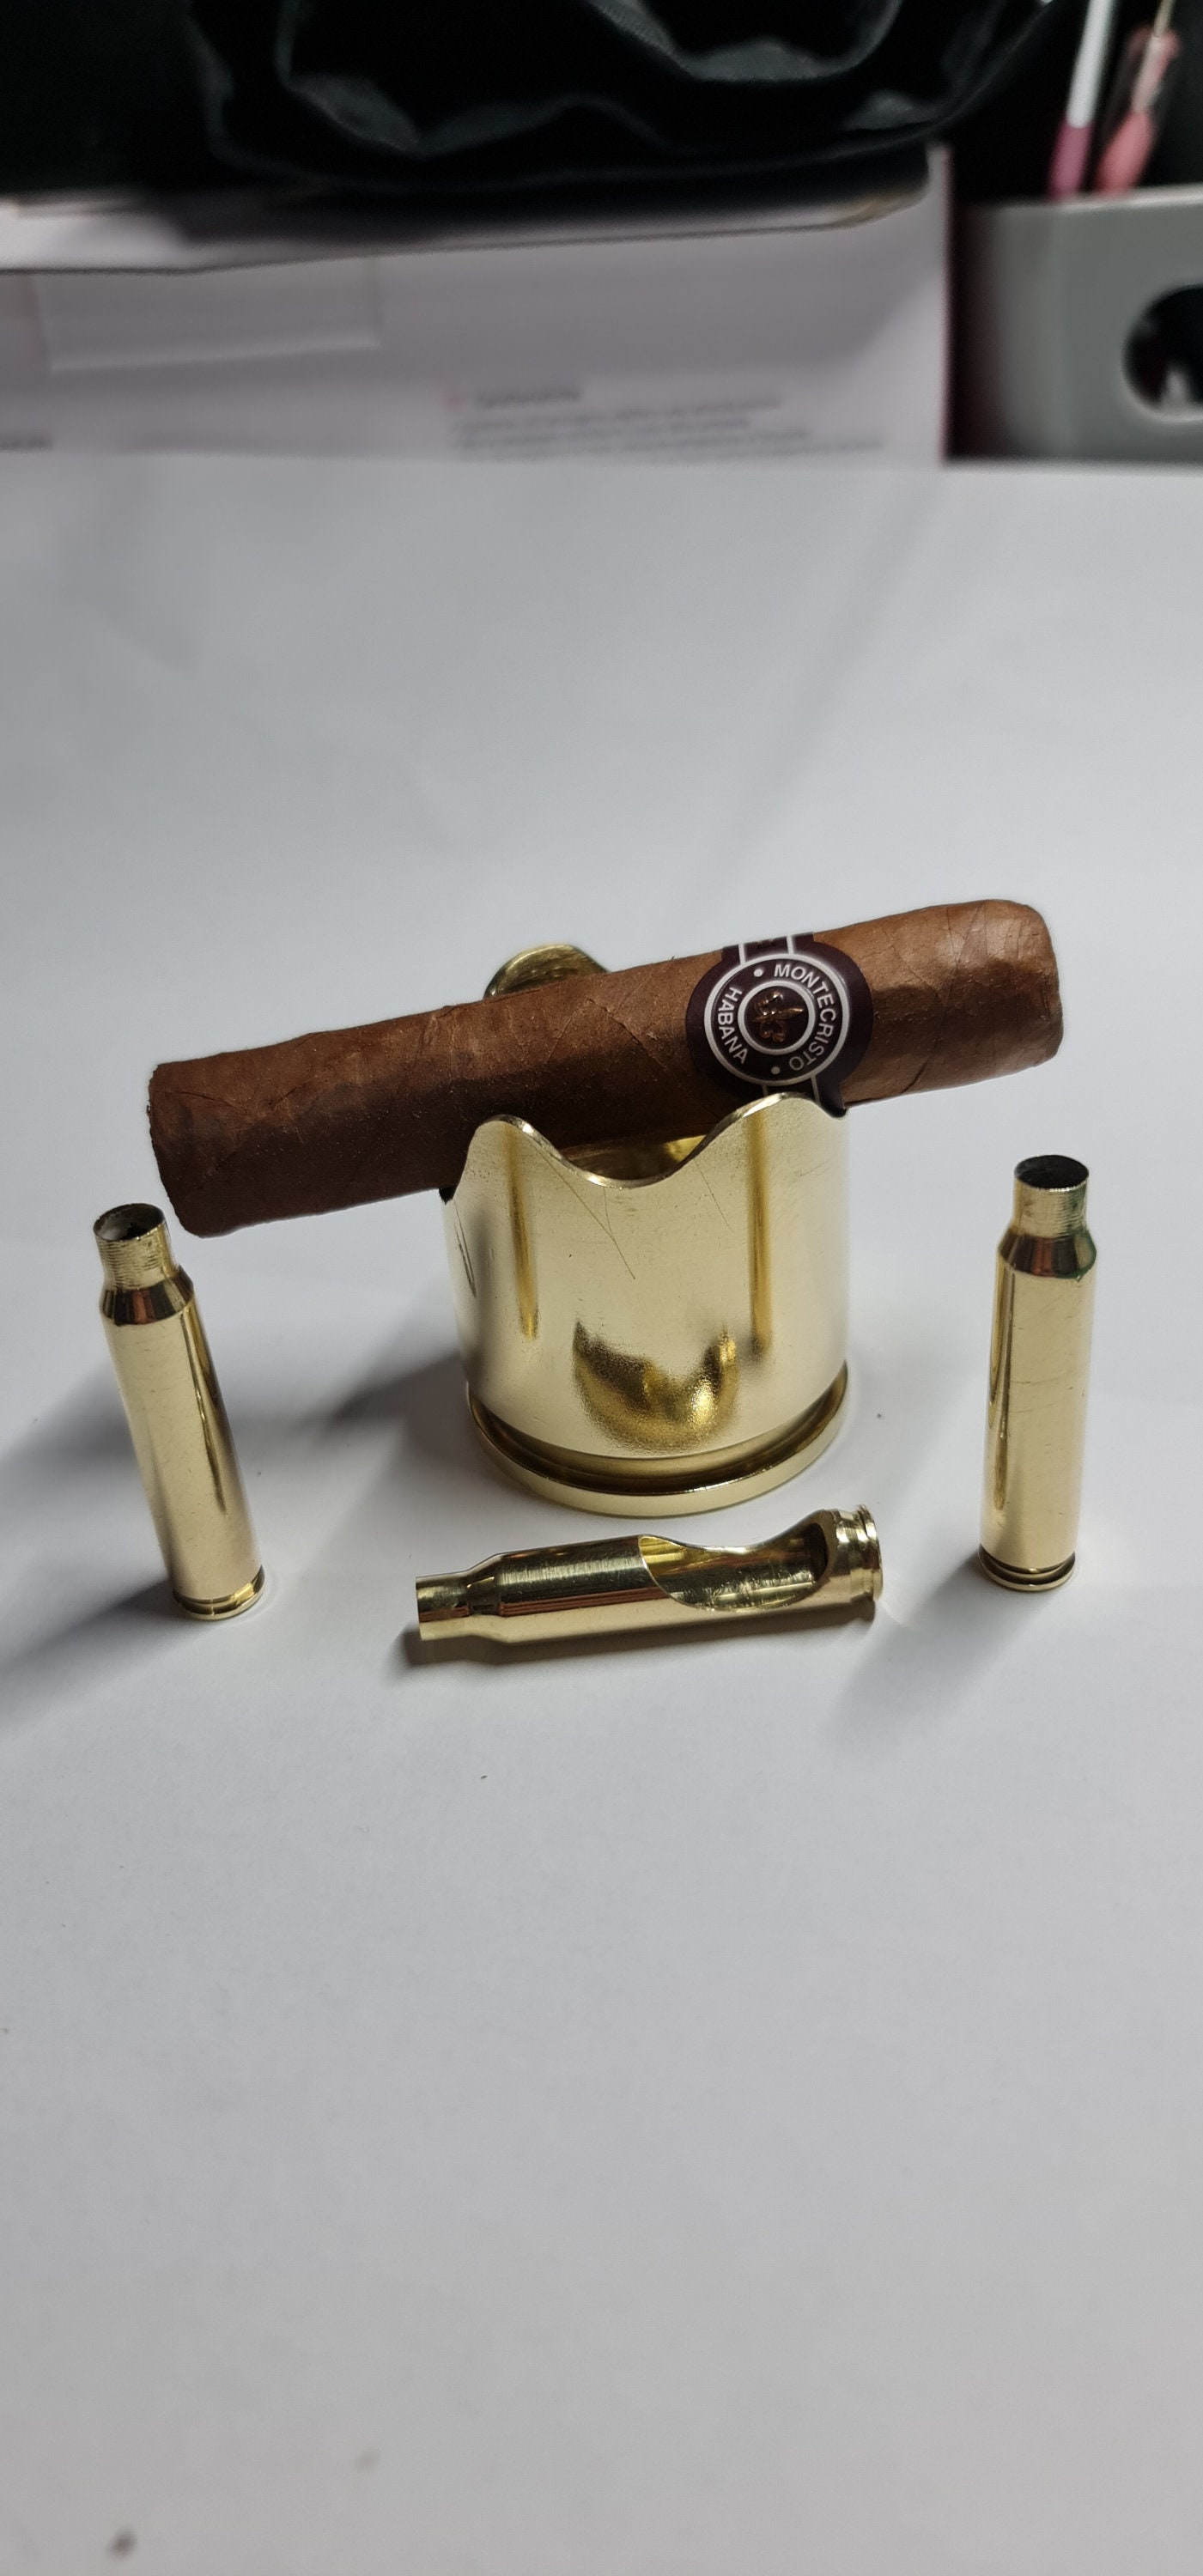 Montecristo Yeti Gift Set - 12 cigars - The Cigar Merchant of Roswell